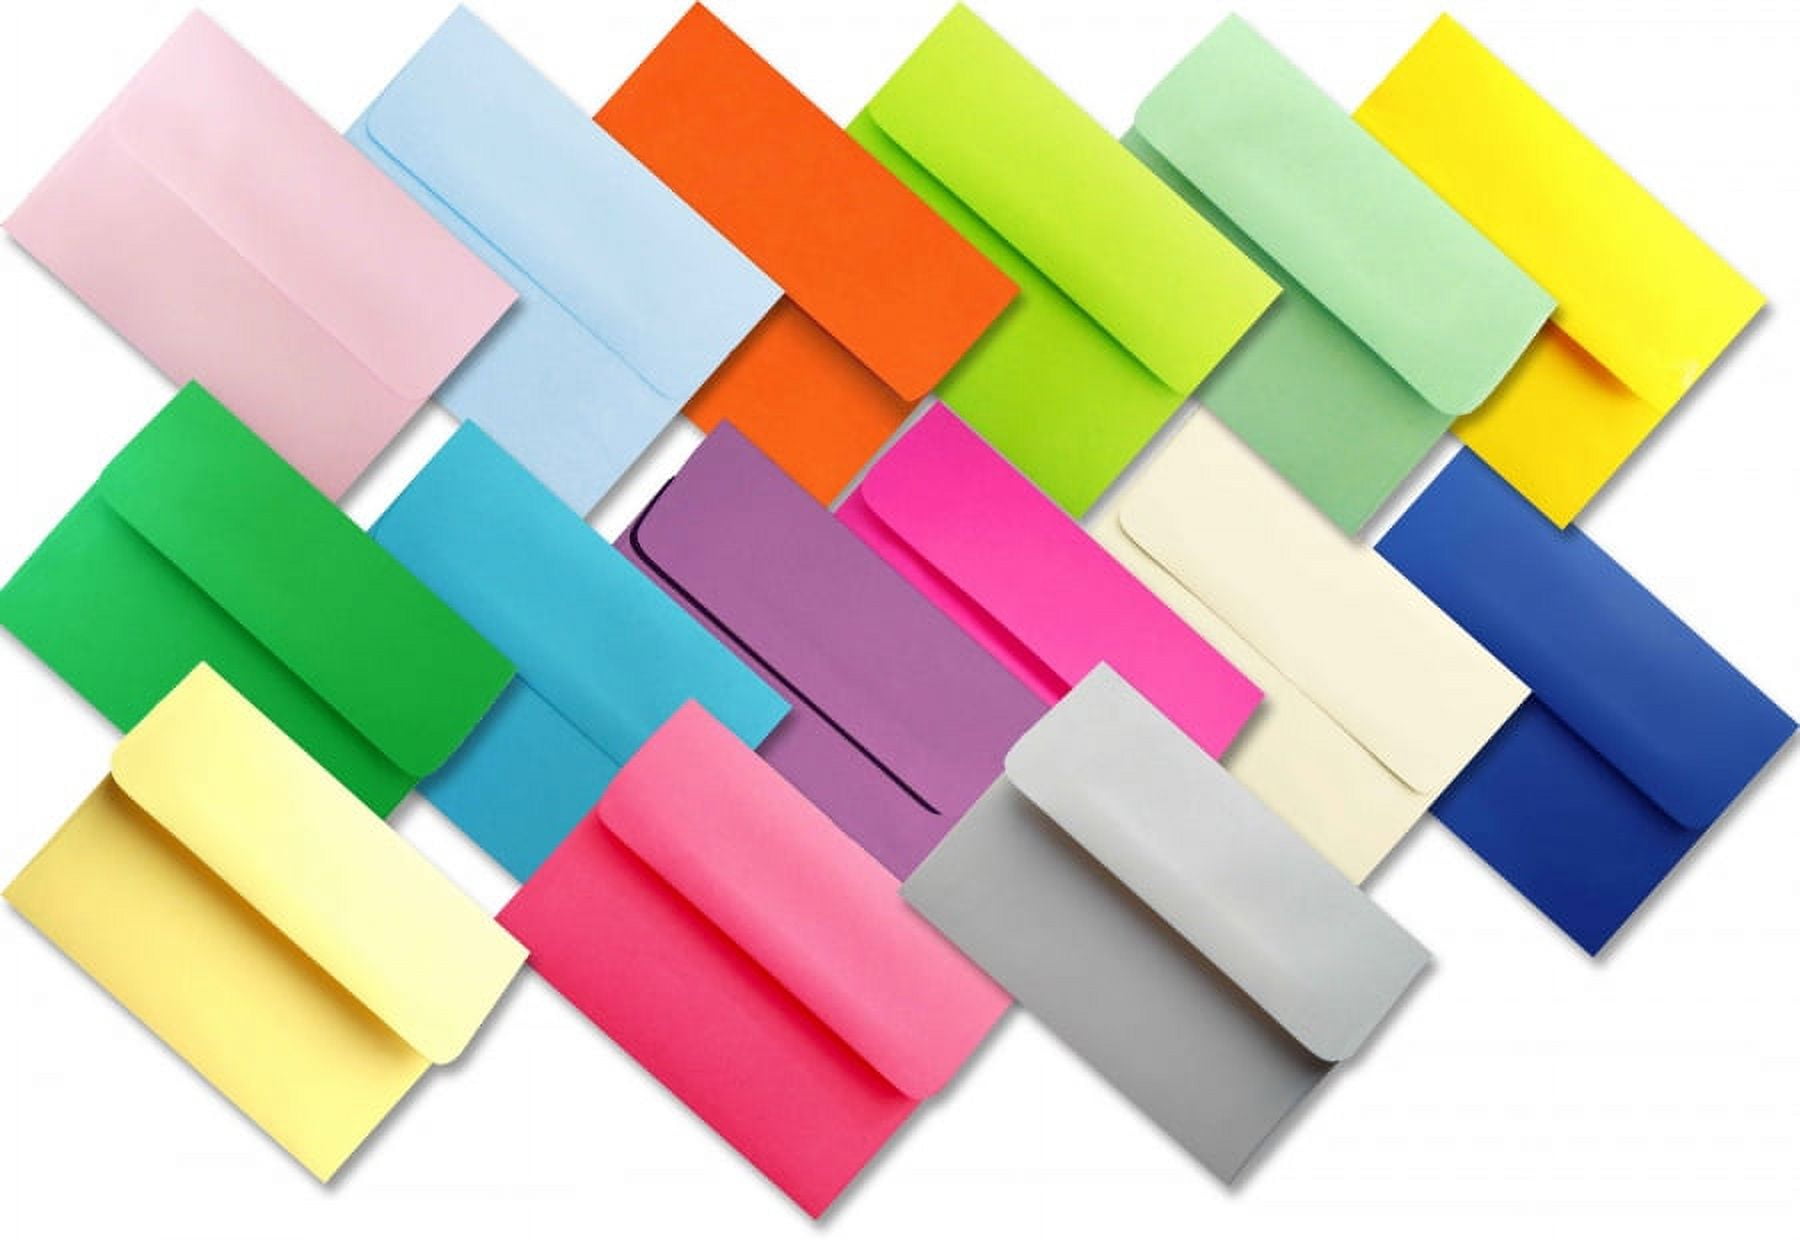 Colored Plastic Envelope, Assorted Index Booklet 5 1/2x7 1/2, 920B1ASSRTD